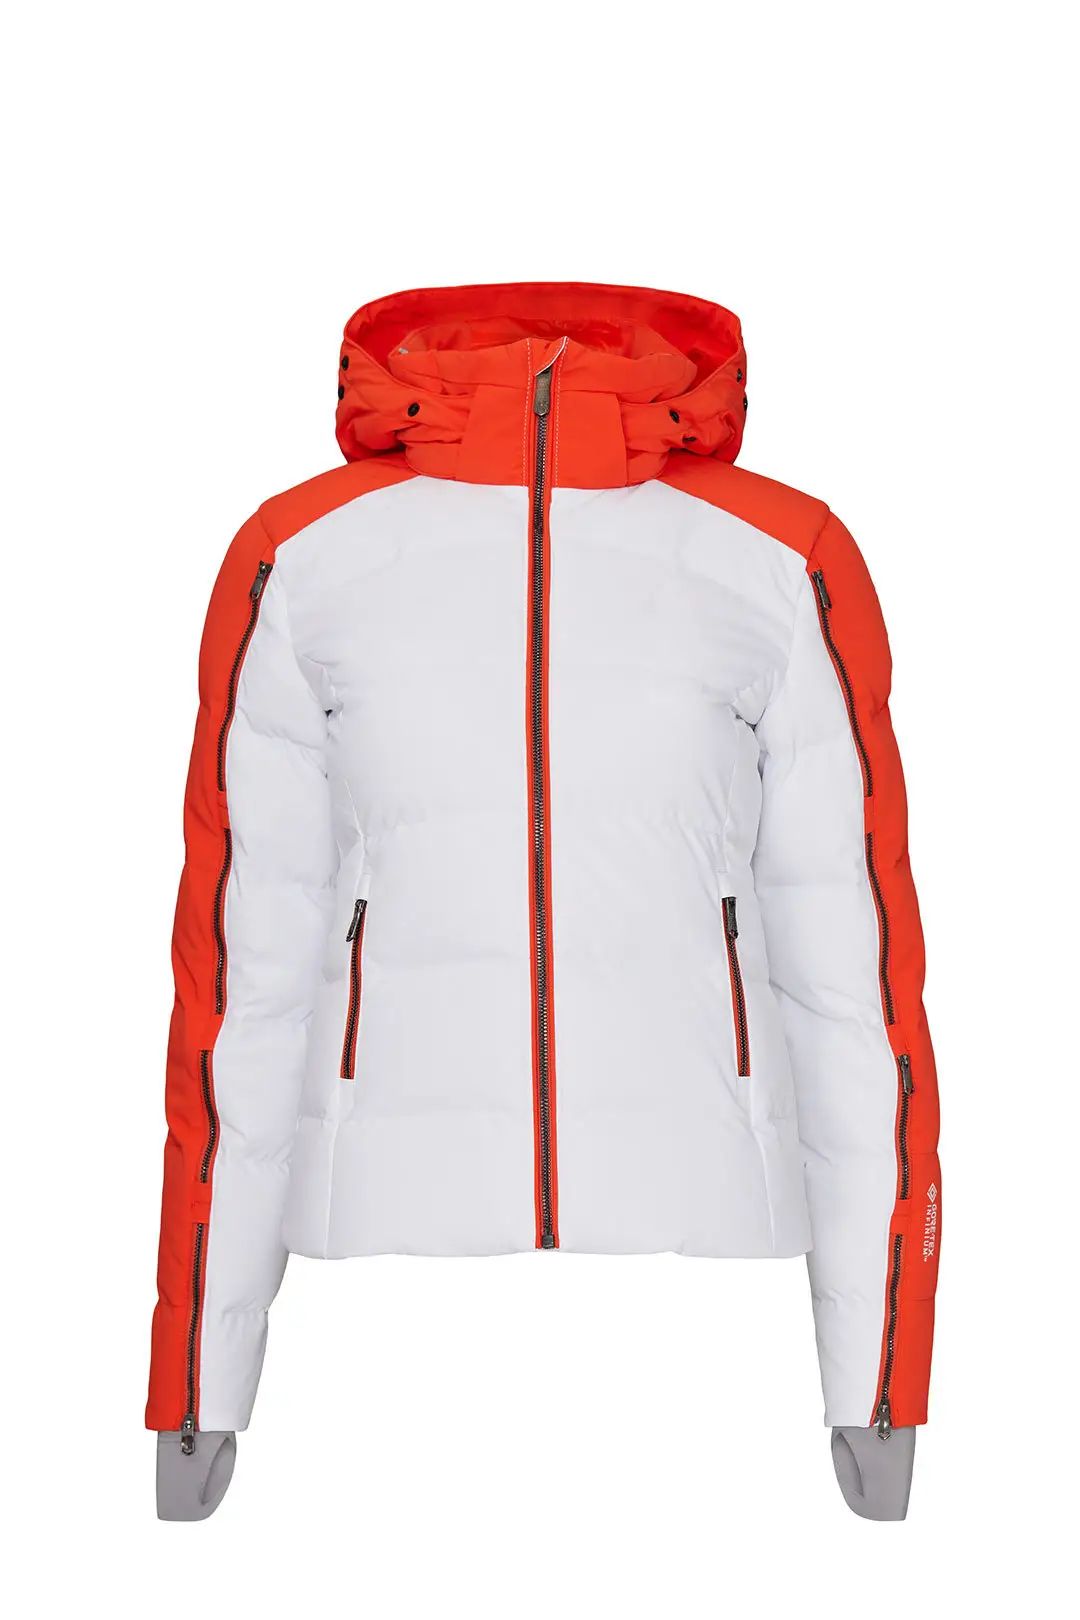 SPYDER Falline Ski Jacket | Rent the Runway